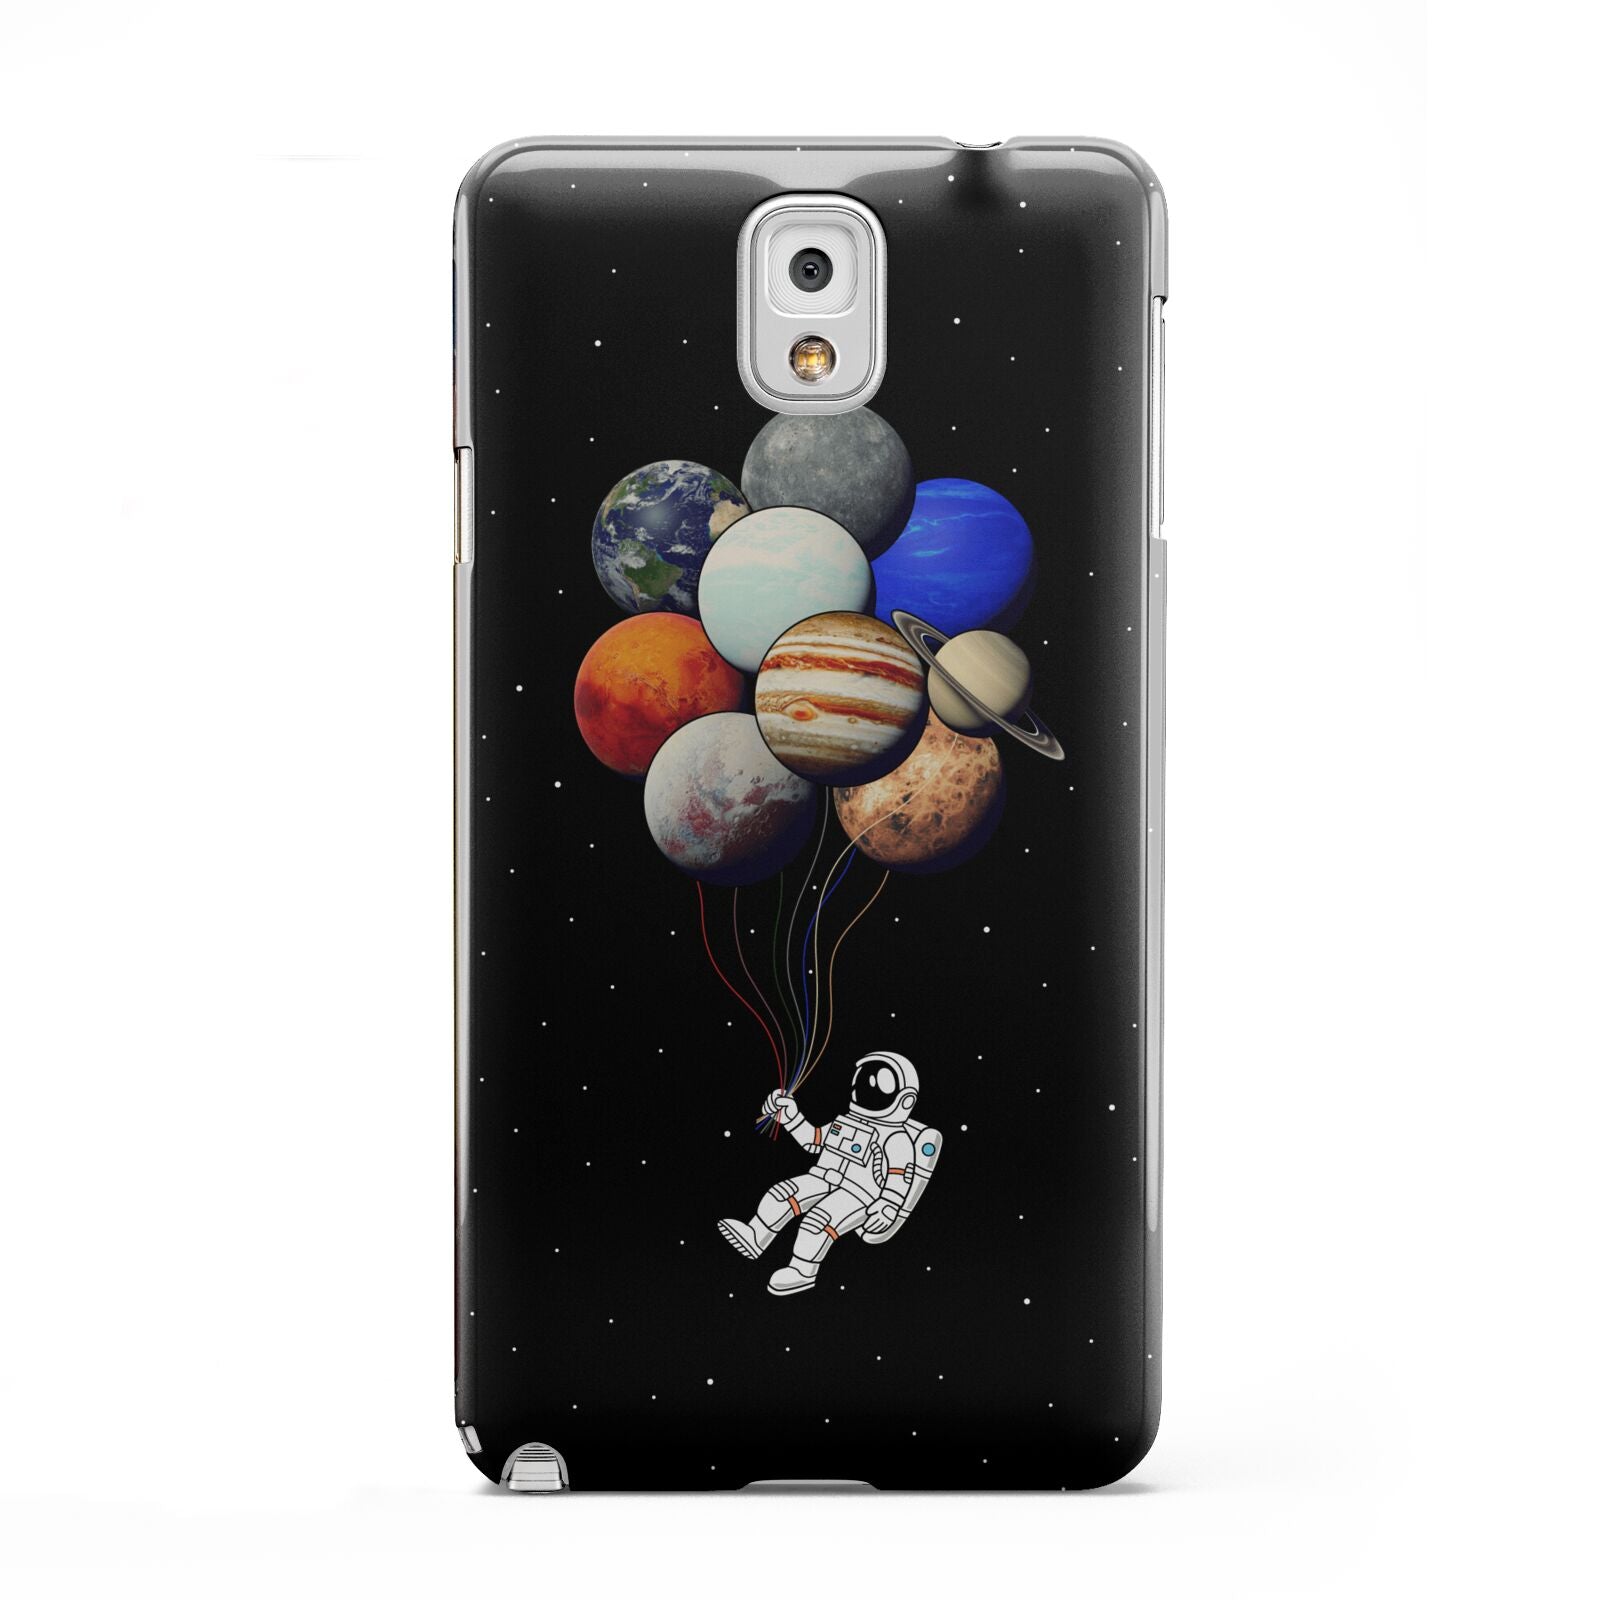 Astronaut Planet Balloons Samsung Galaxy Note 3 Case